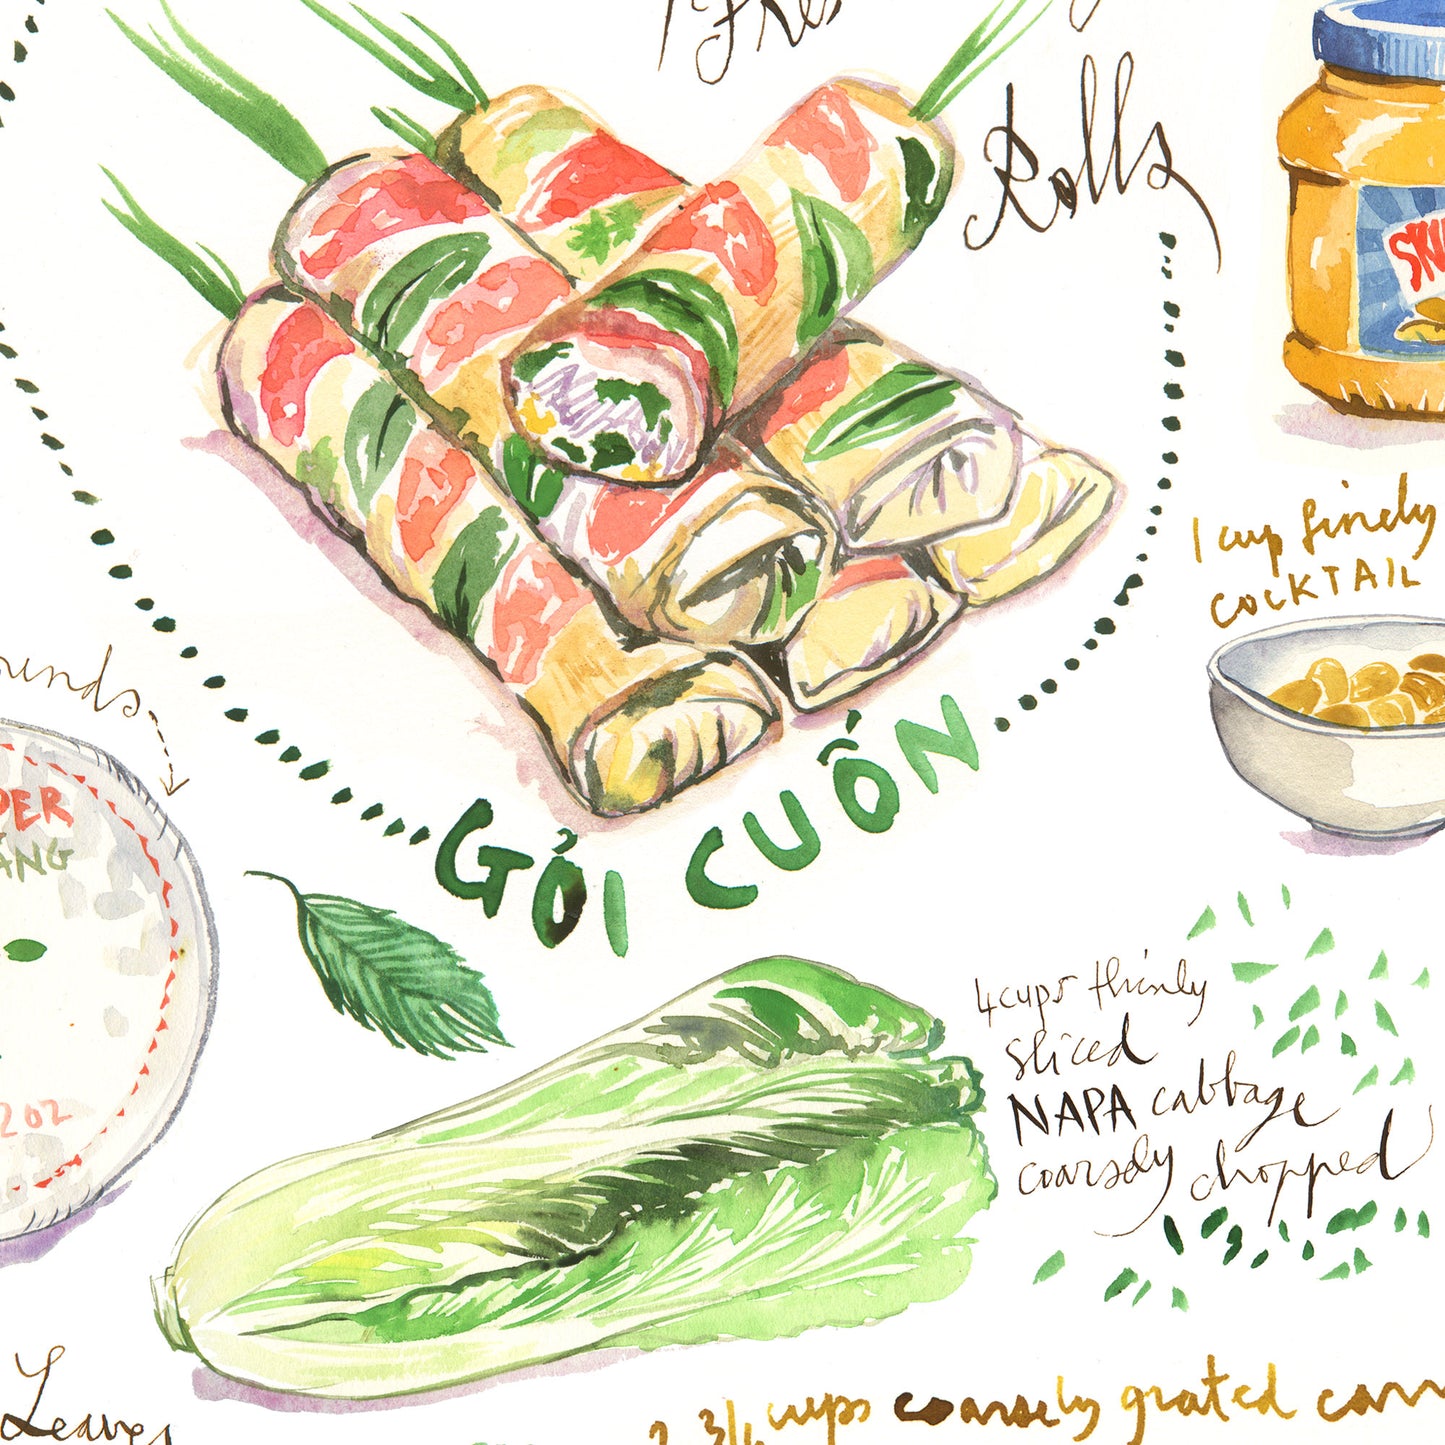 Summer rolls recipe print / Goi Cuon